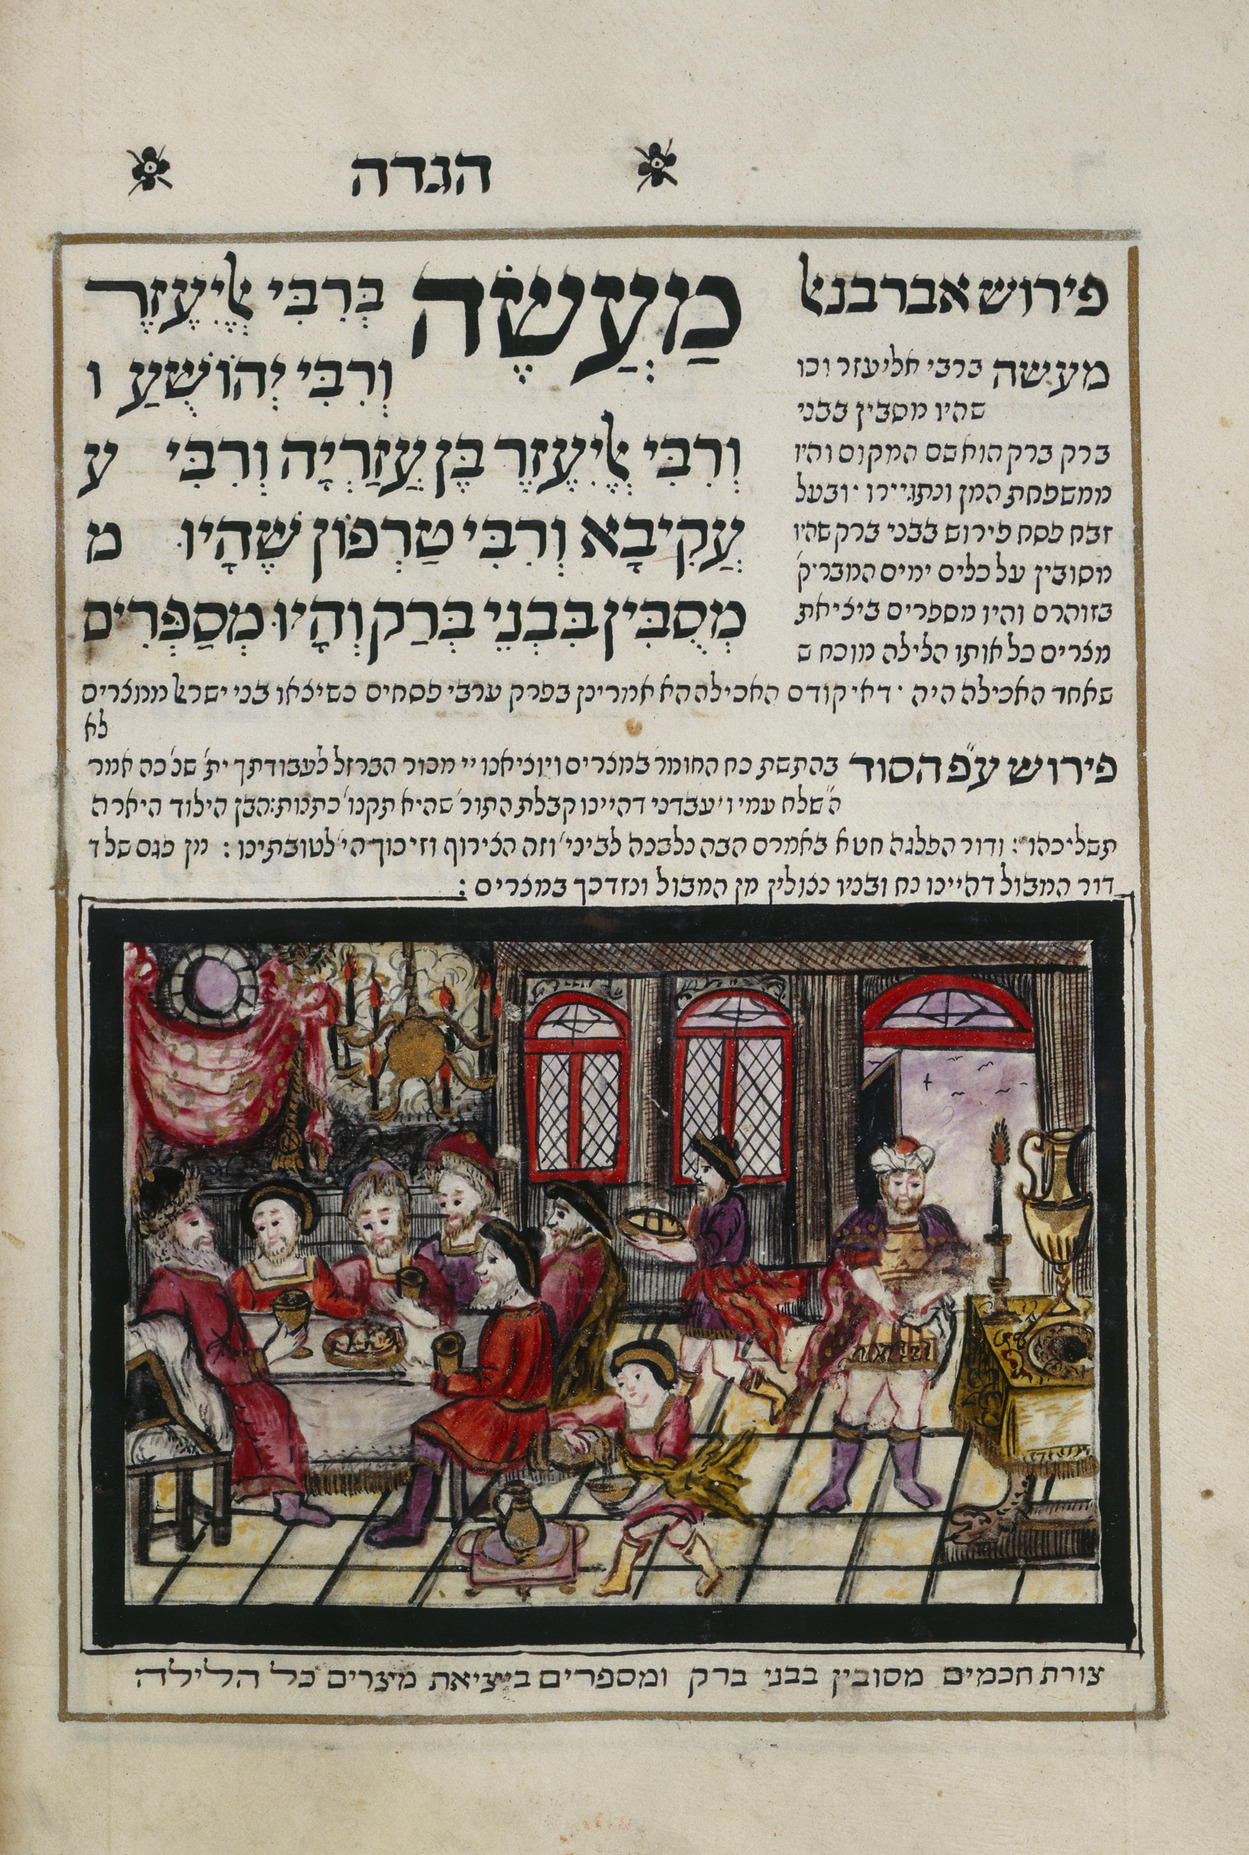 The Rabbis of Bene Brak - Passover Haggadah (1740)